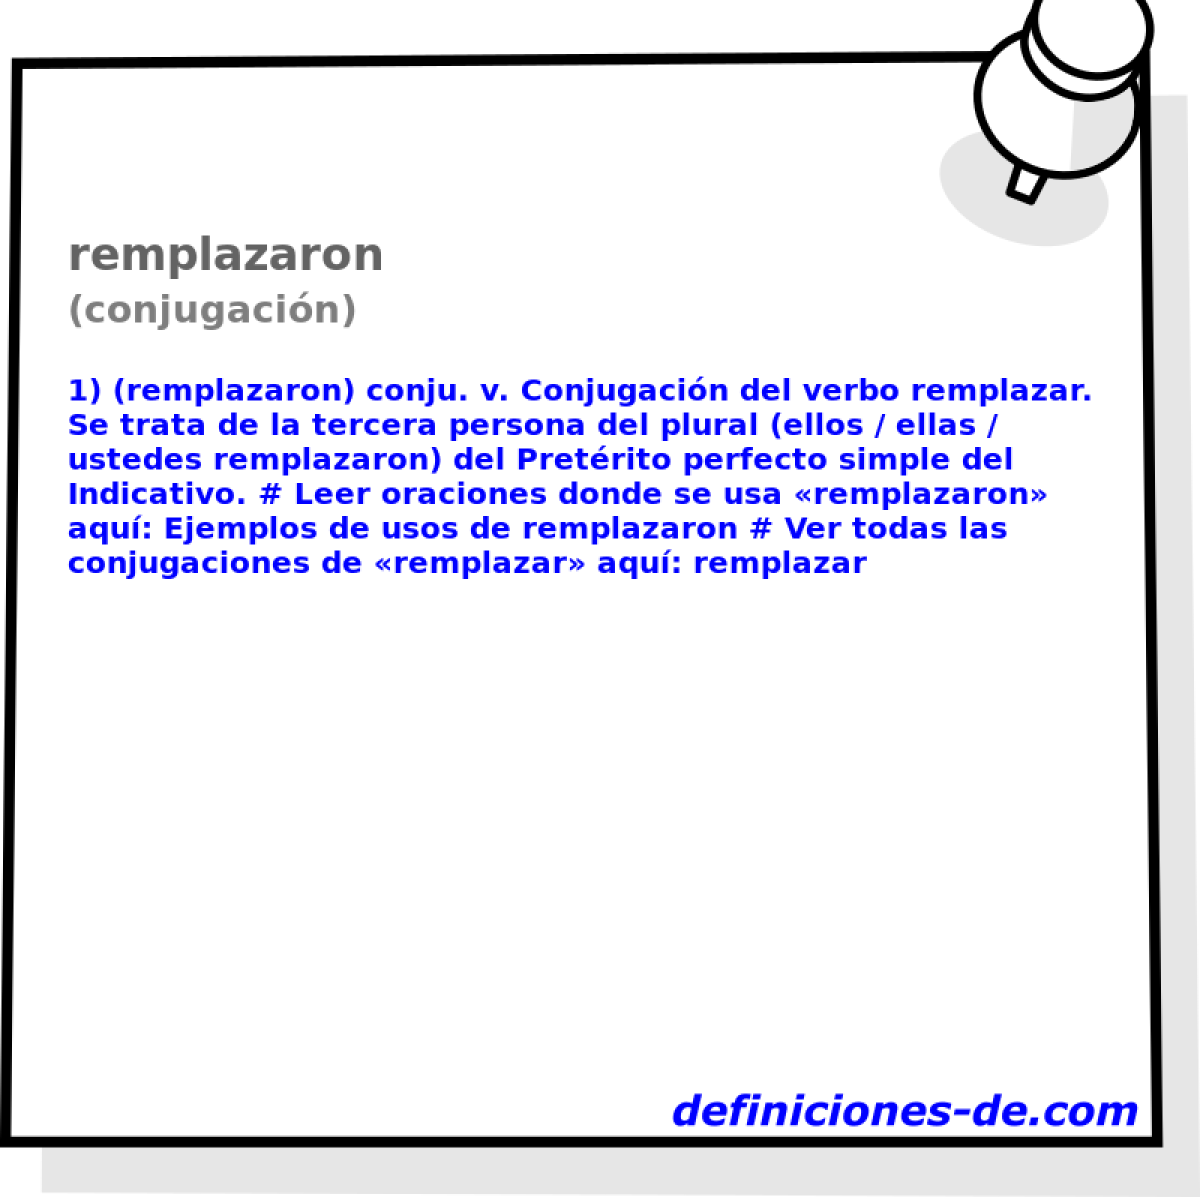 remplazaron (conjugacin)